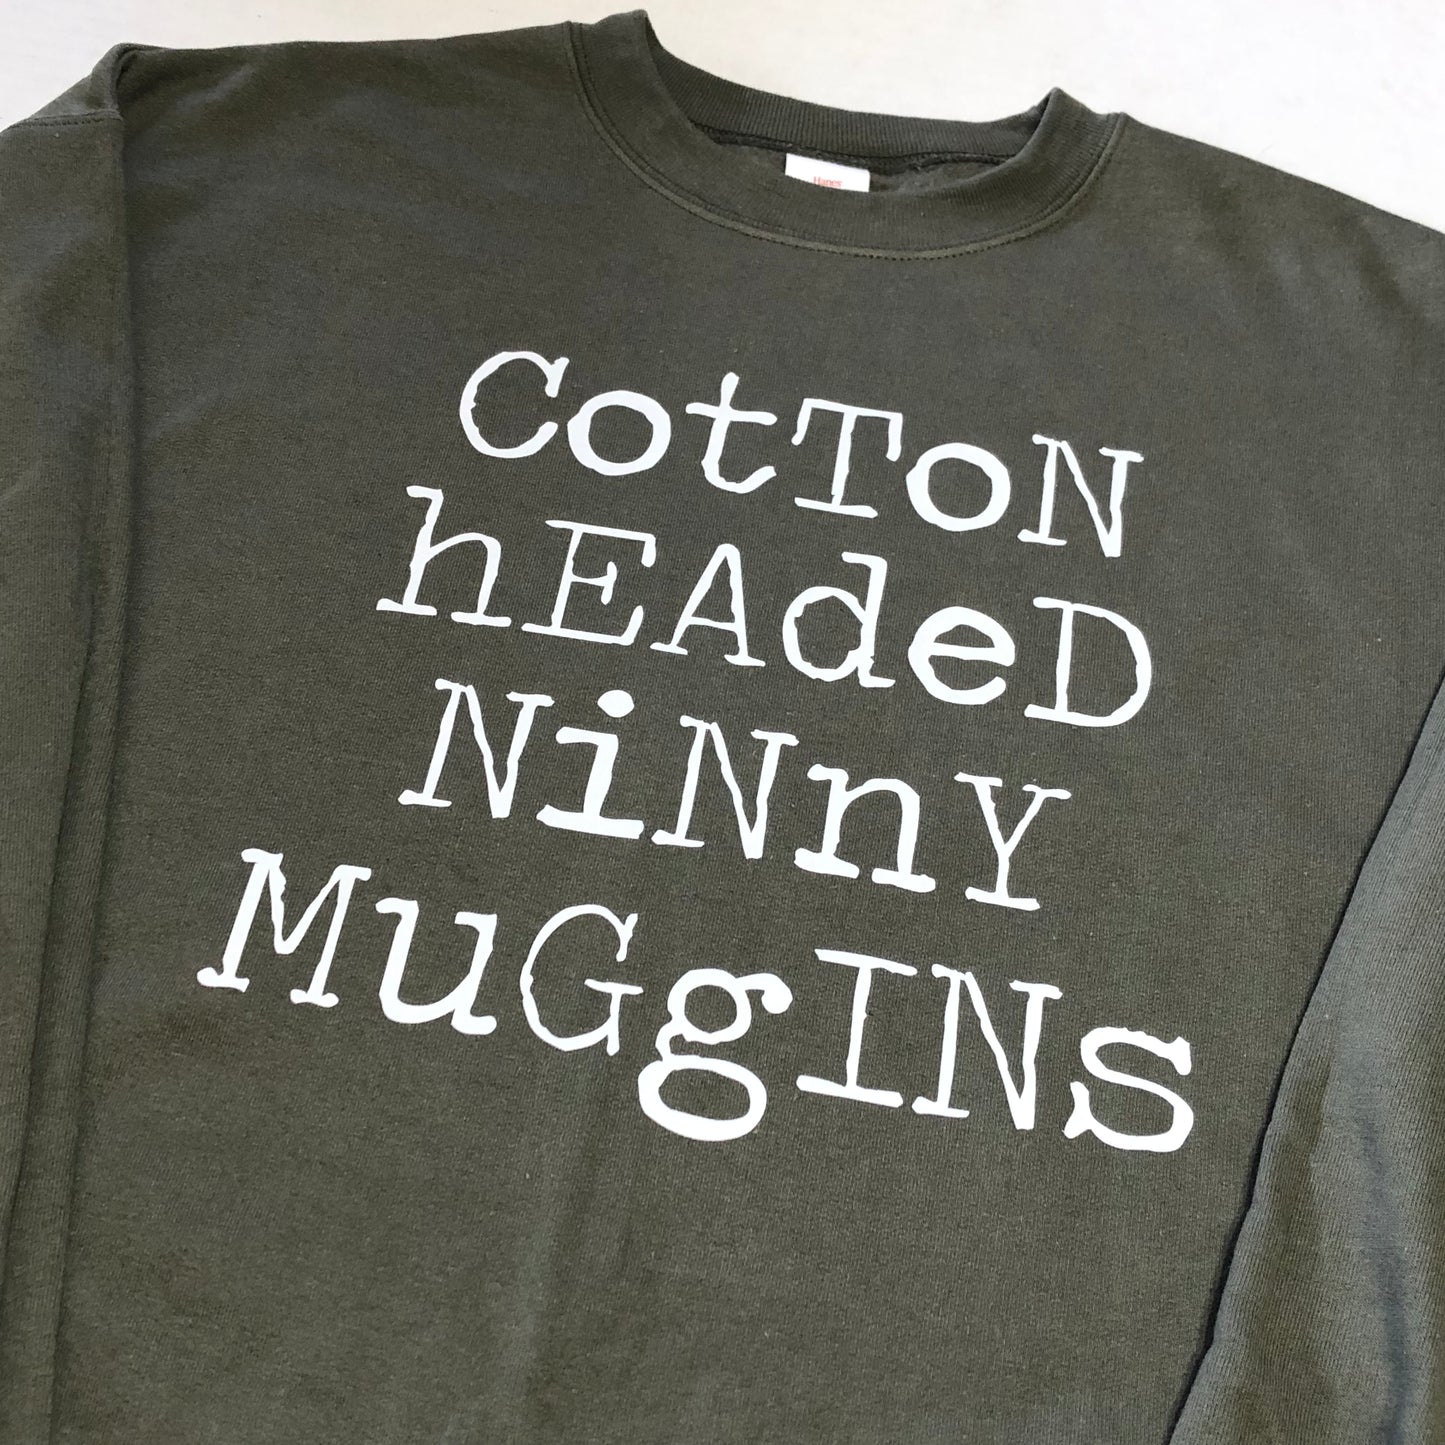 Cotton Headed Ninny Muggins Green Pullover, Sweatshirt